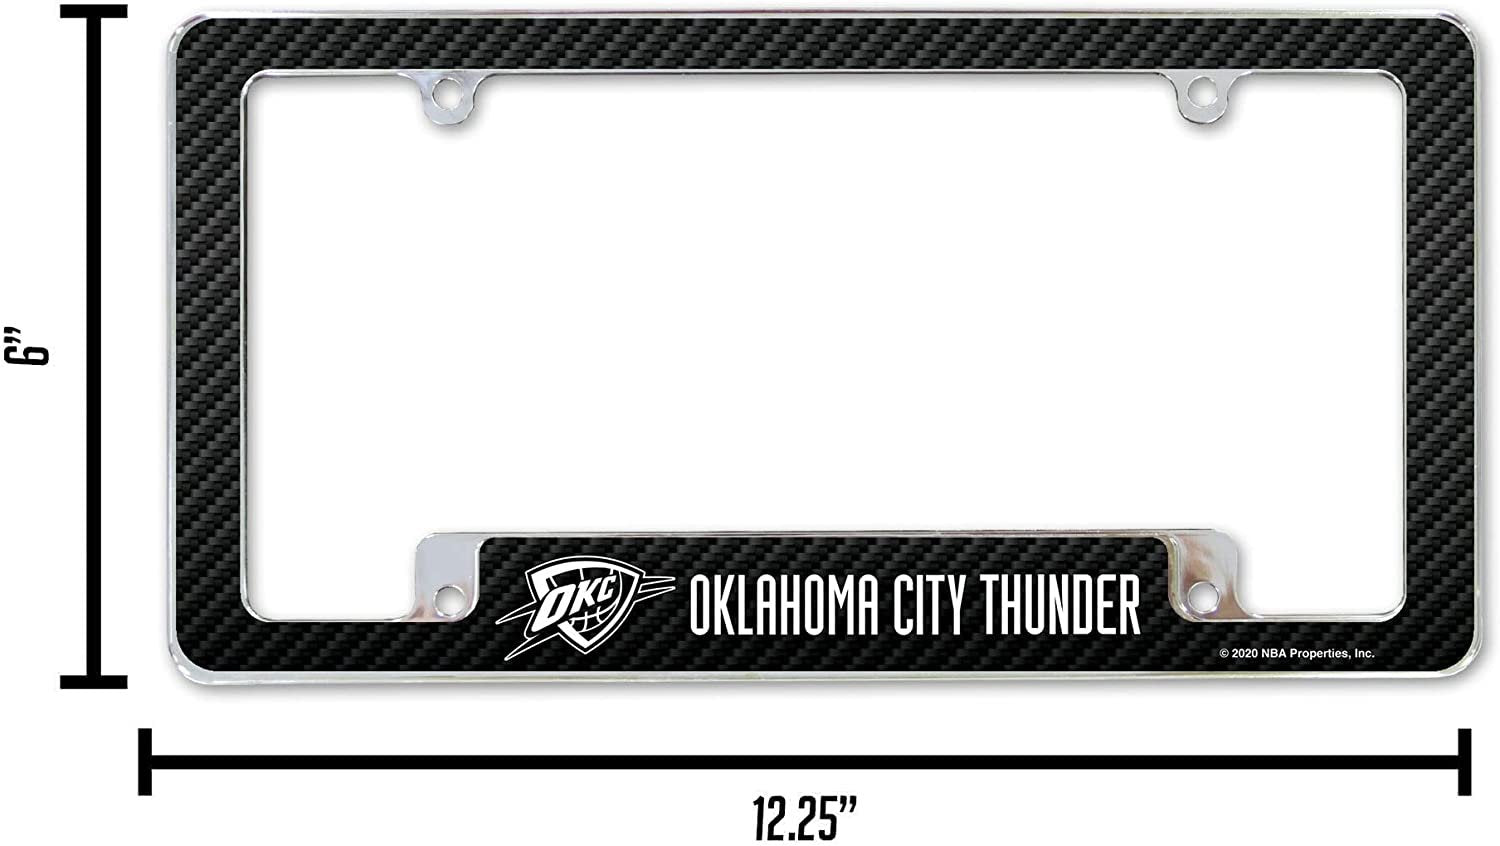 Oklahoma City Thunder Metal License Plate Frame Chrome Tag Cover Carbon Fiber Design 6x12 Inch